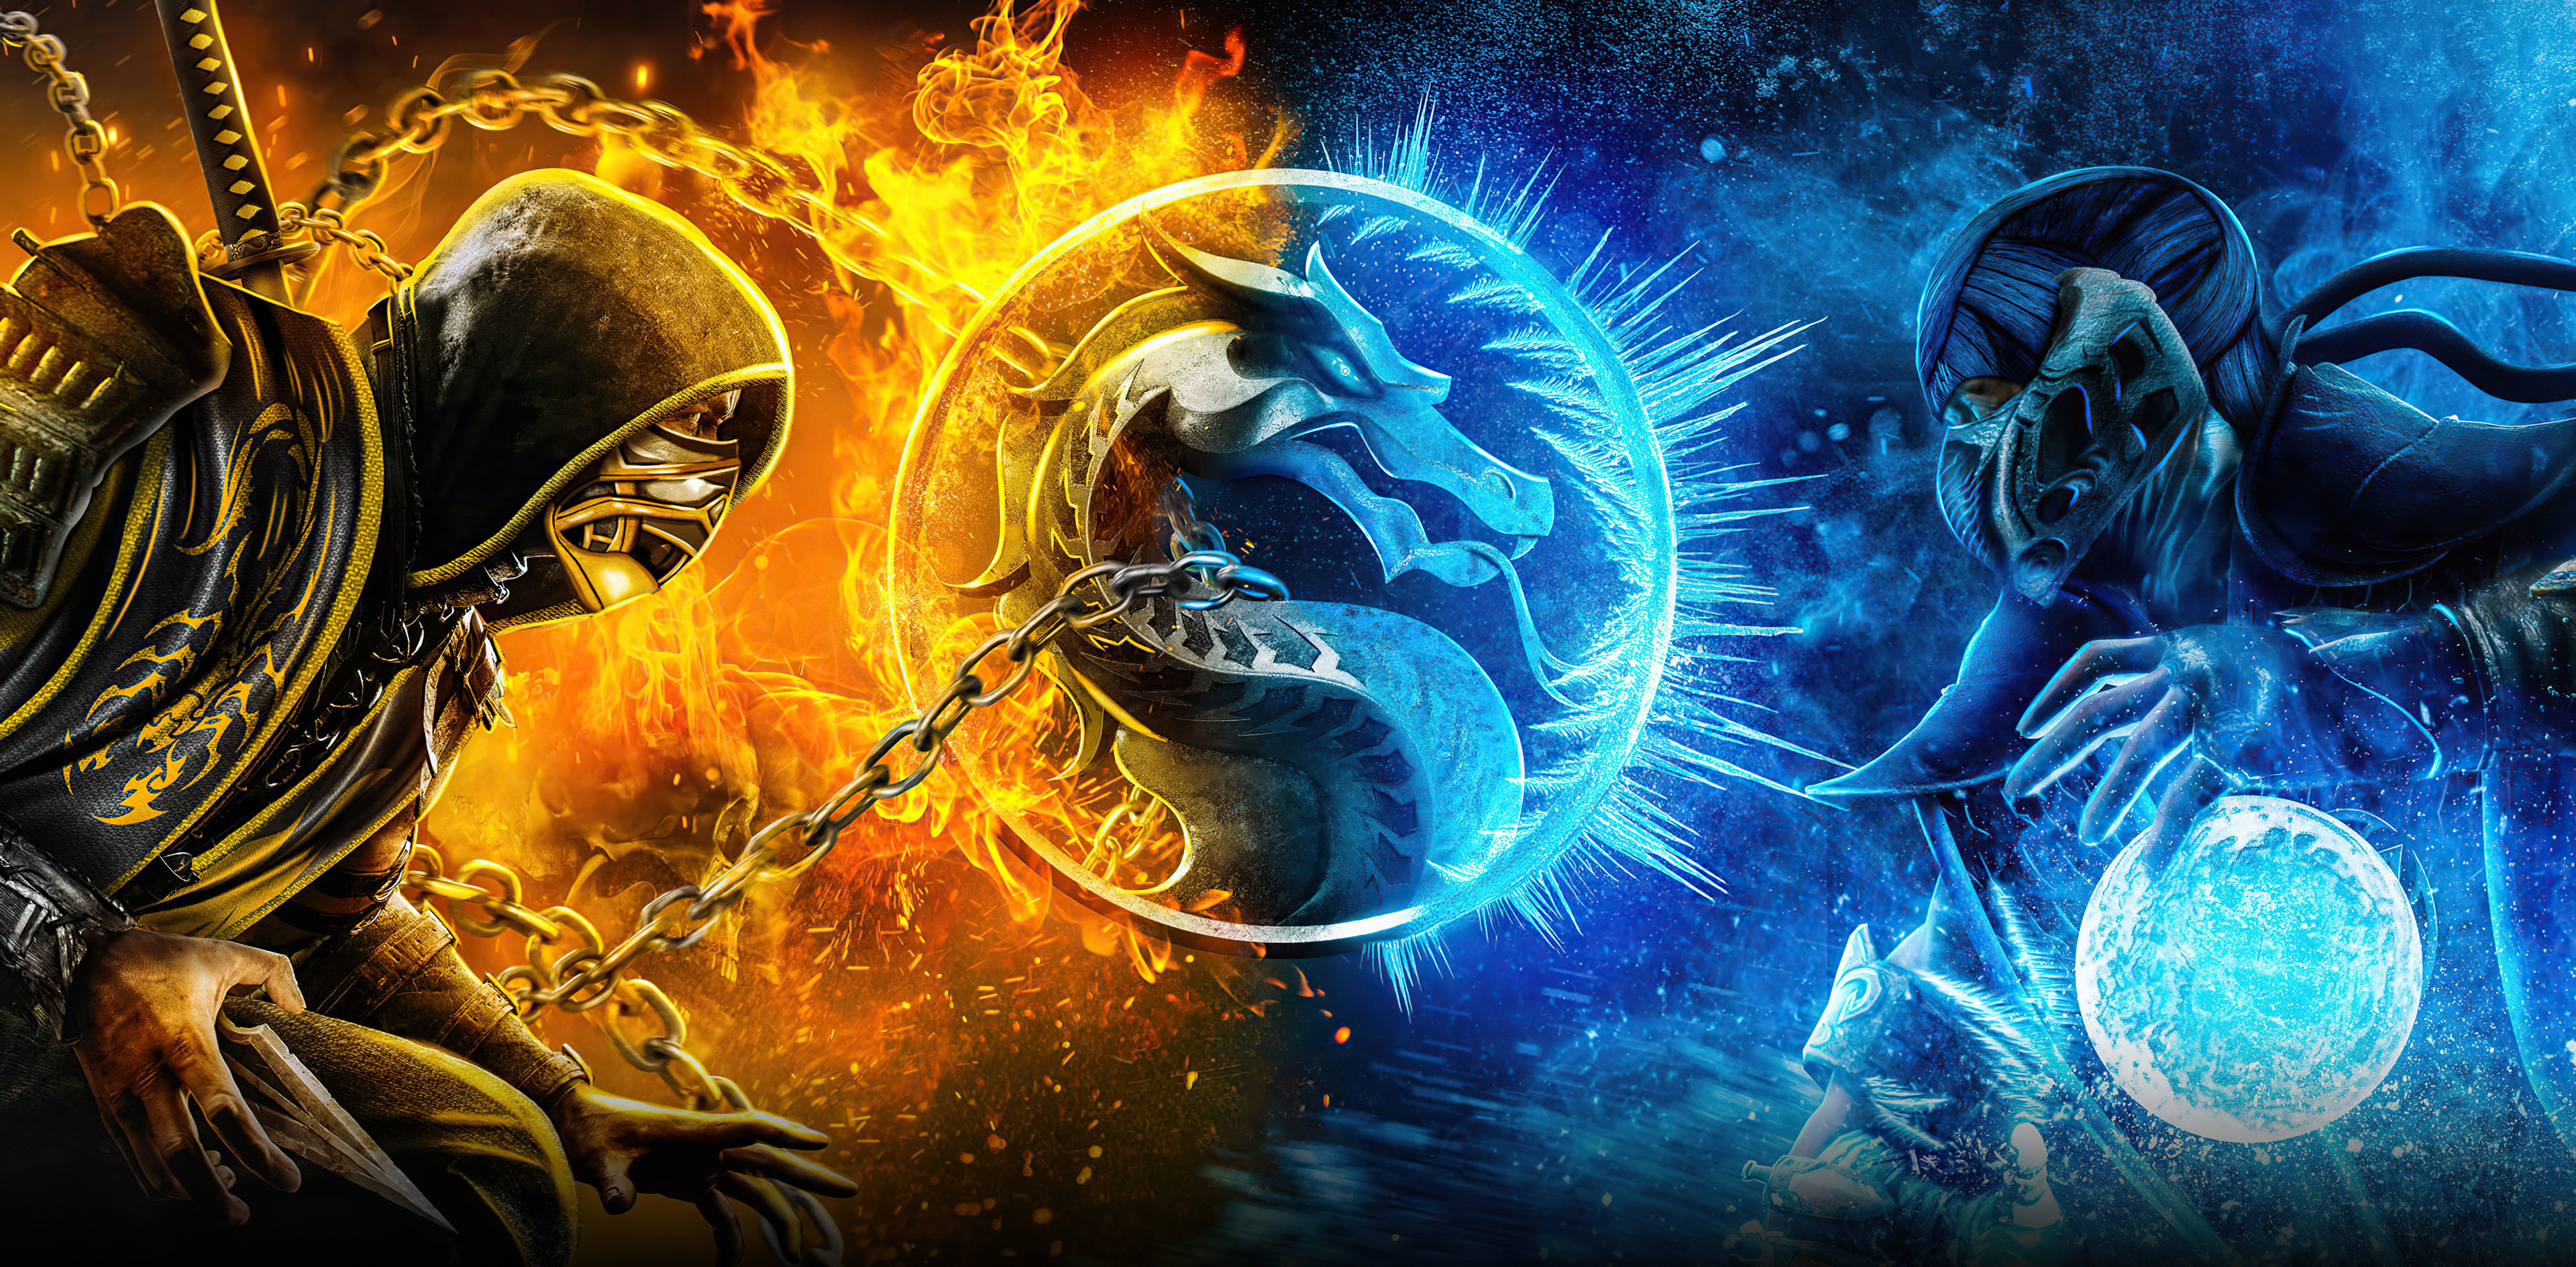 Mortal Kombat (2021)  Mortal kombat, Mortal kombat art, Mortal kombat x  wallpapers